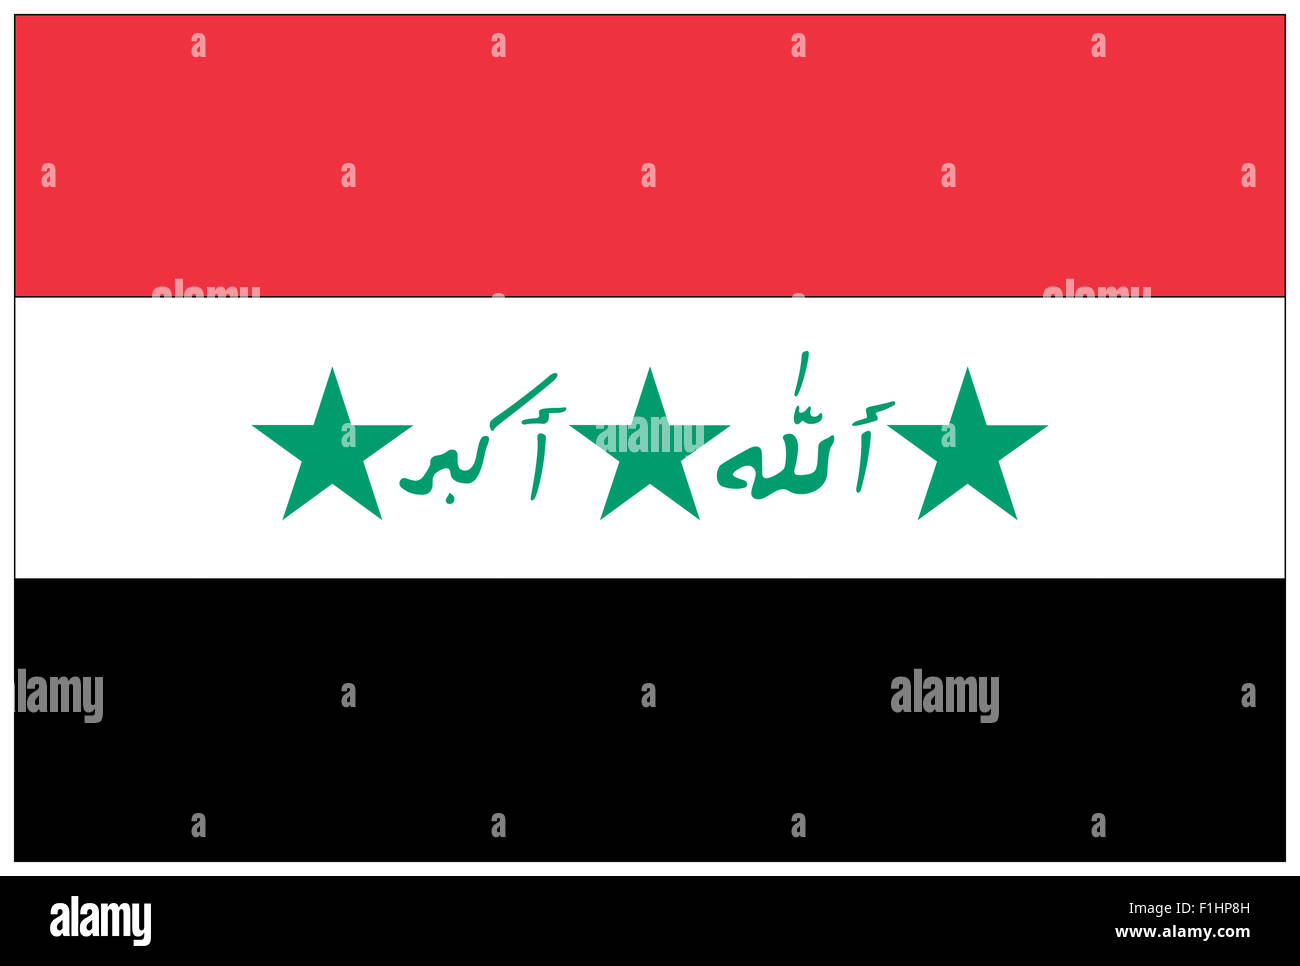 Irakische Flagge. irakische Flagge schwenken - Stockfotografie: lizenzfreie  Fotos © weyo 98104012